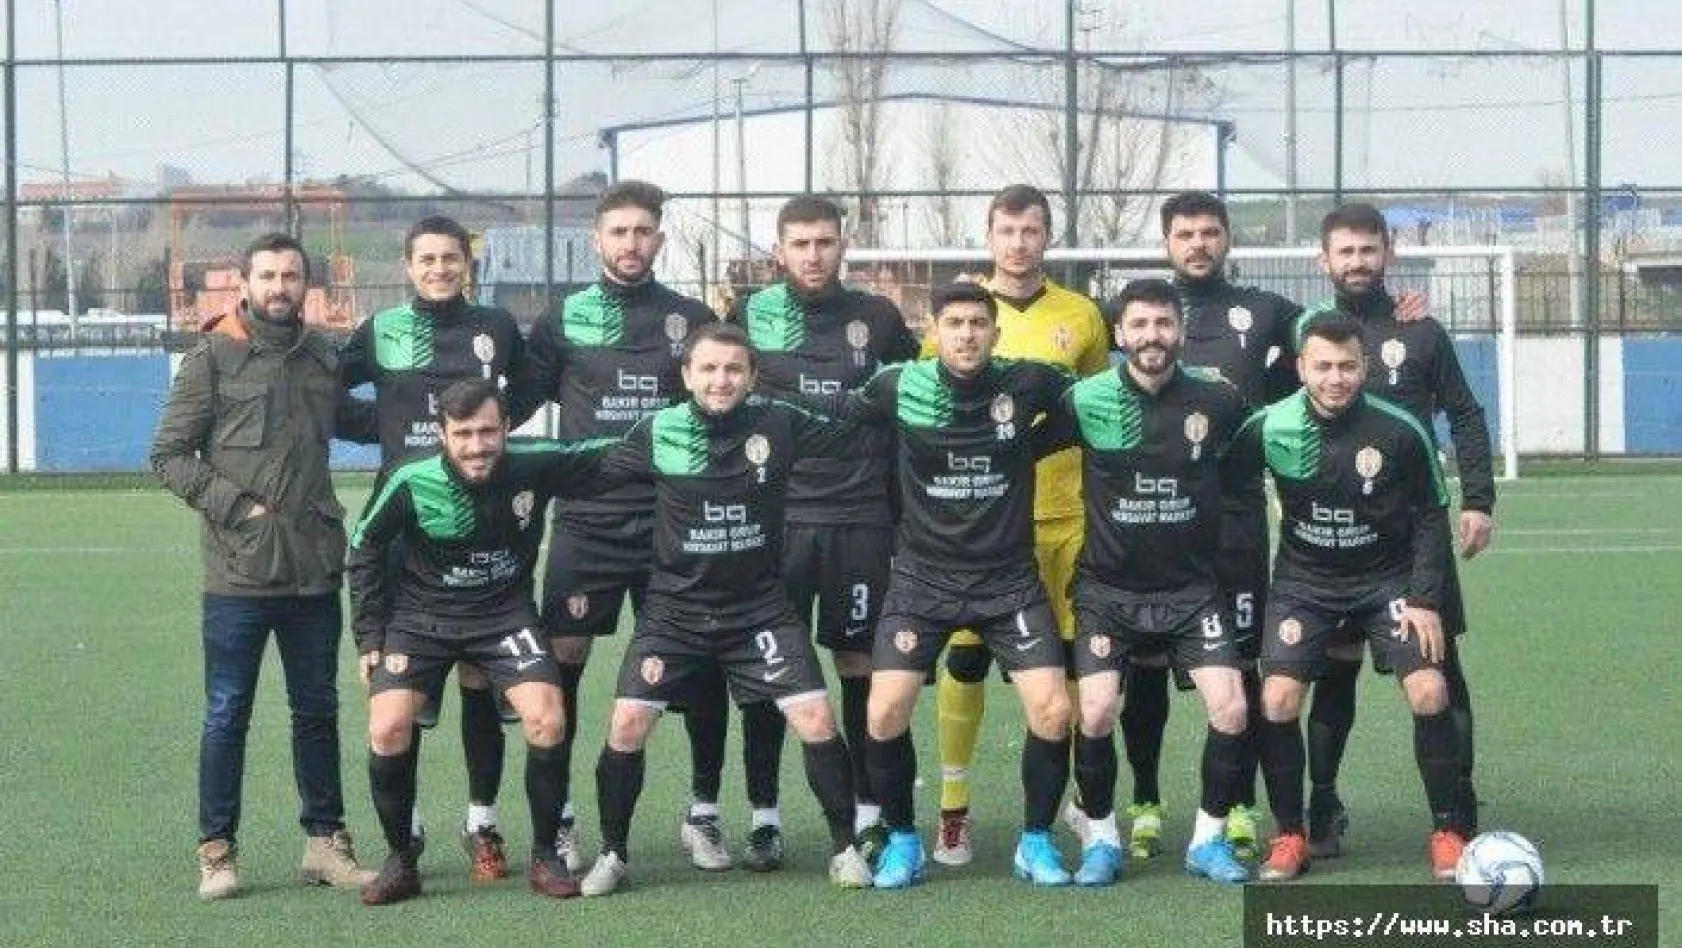 Silivri derbisinde kazanan Selimpaşa oldu 2-0